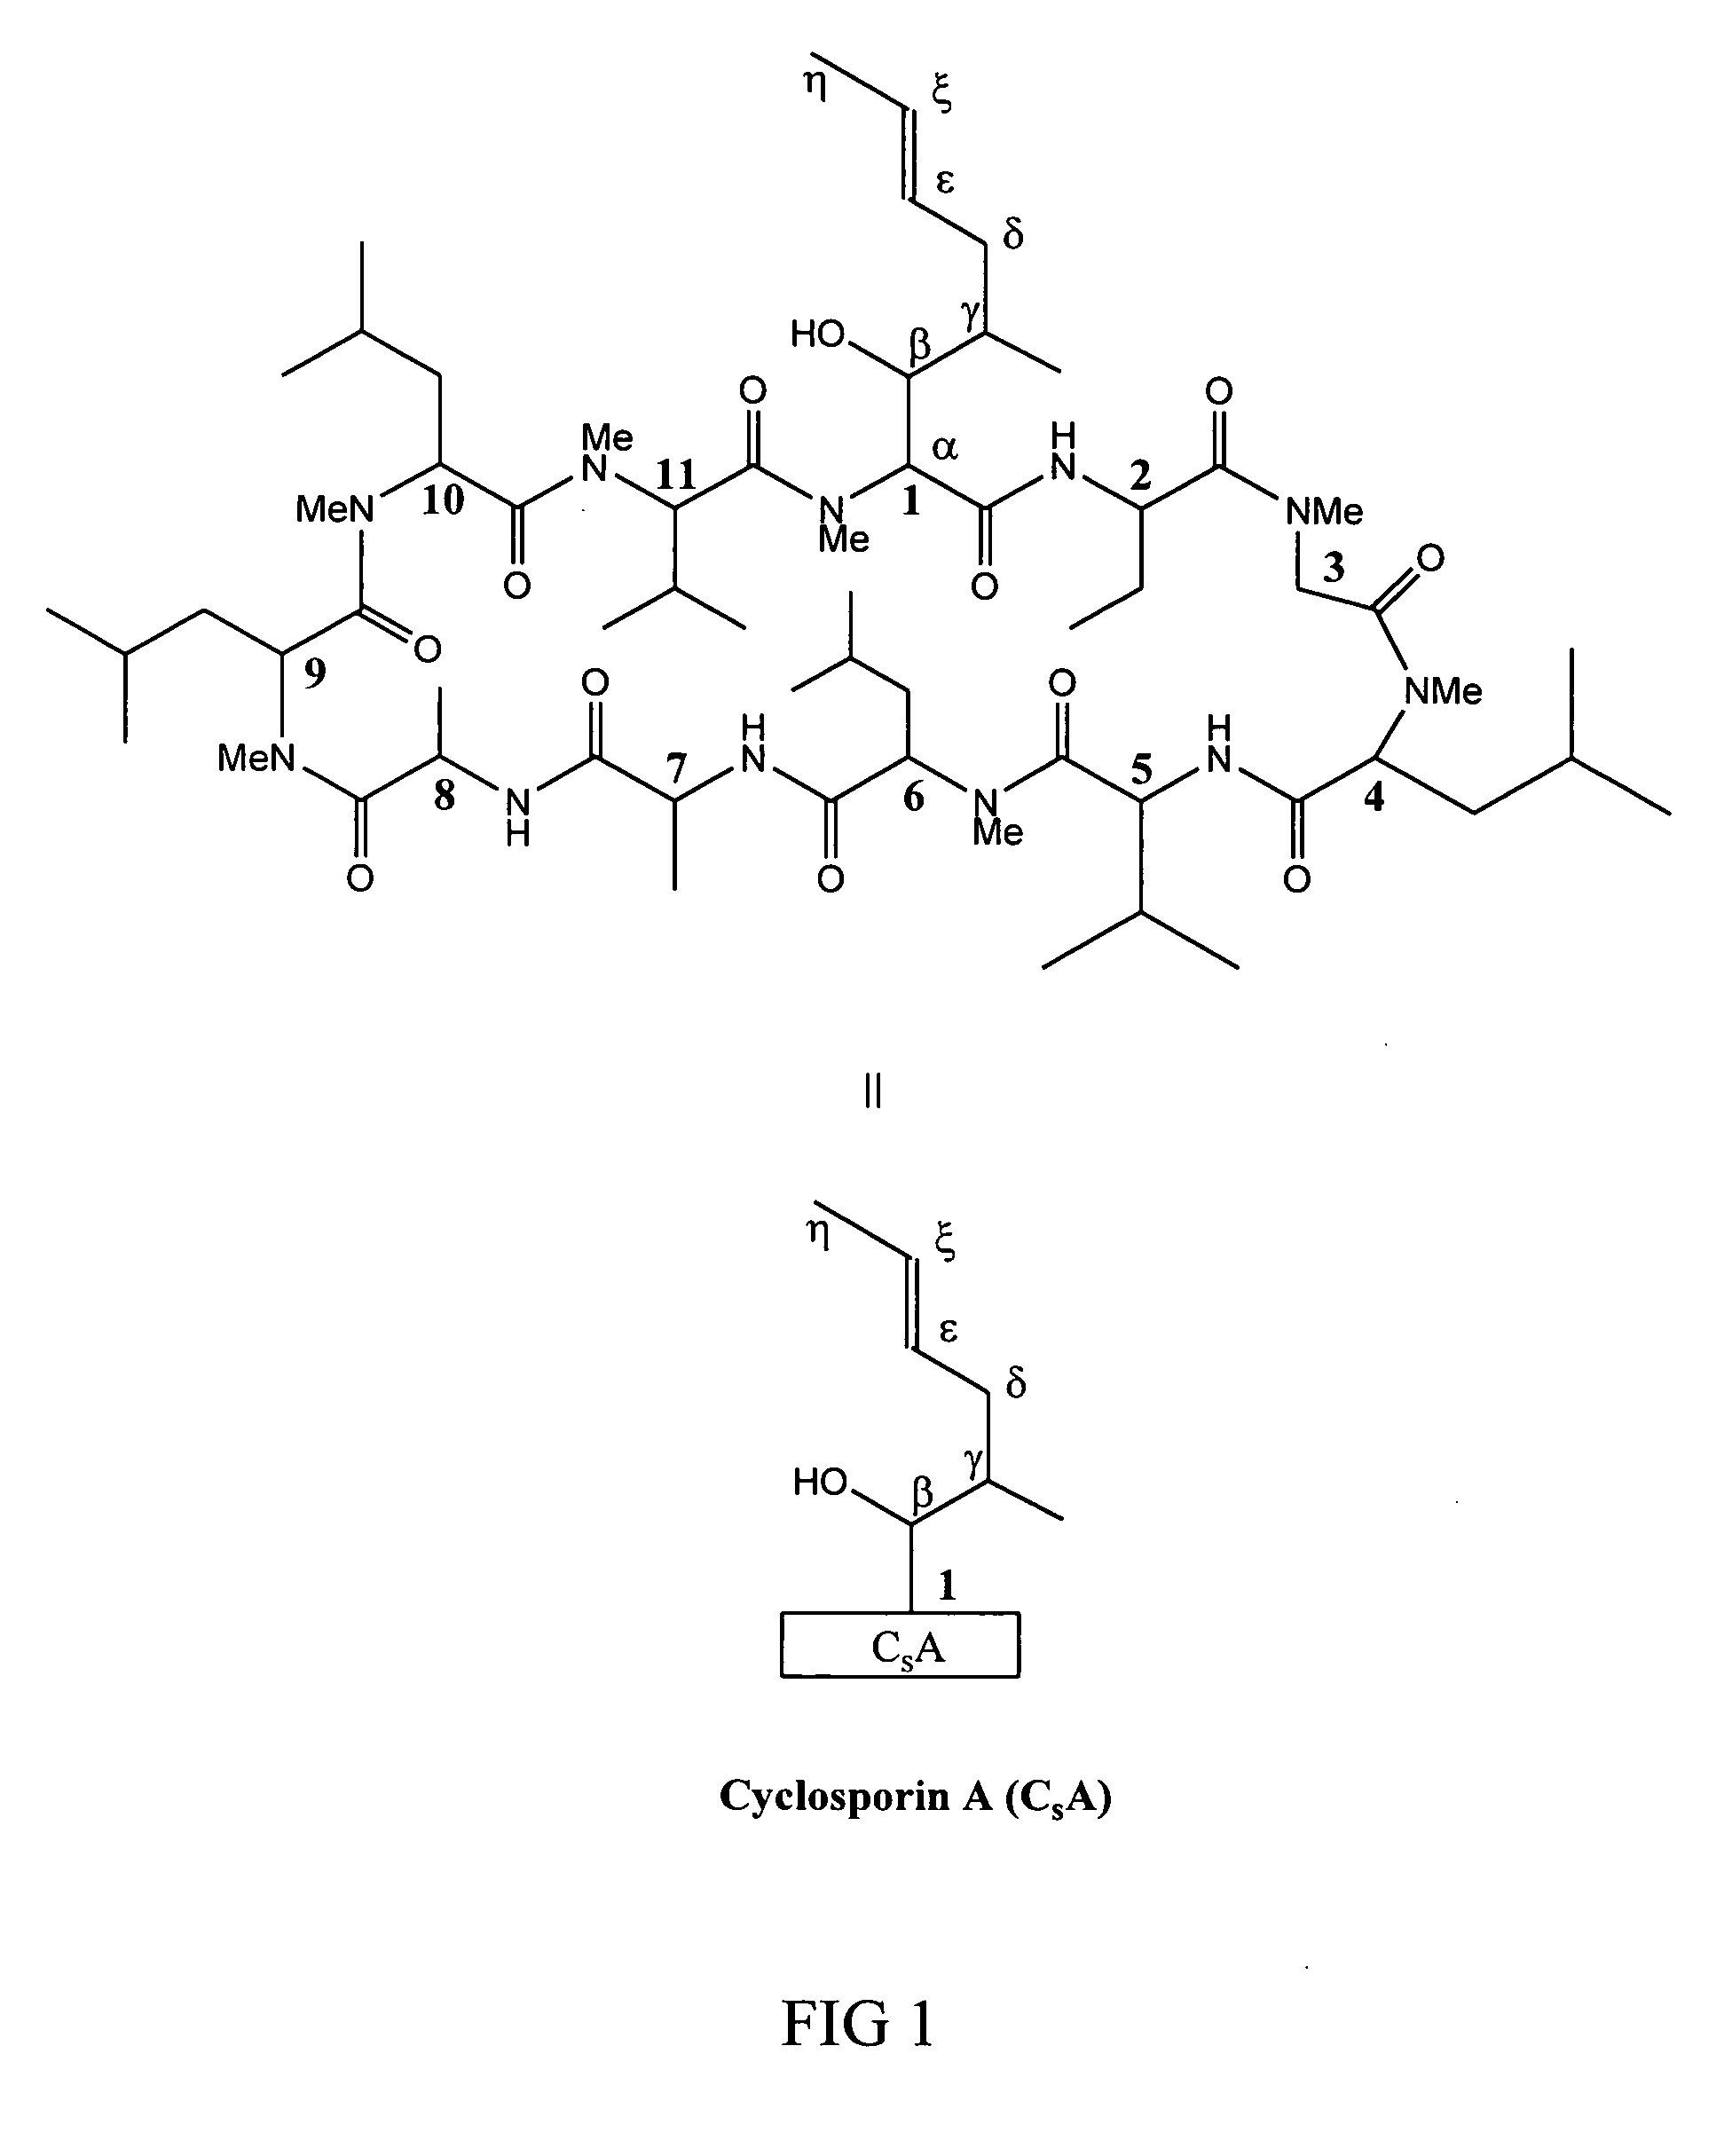 Metabolites of cyclosporin analogs